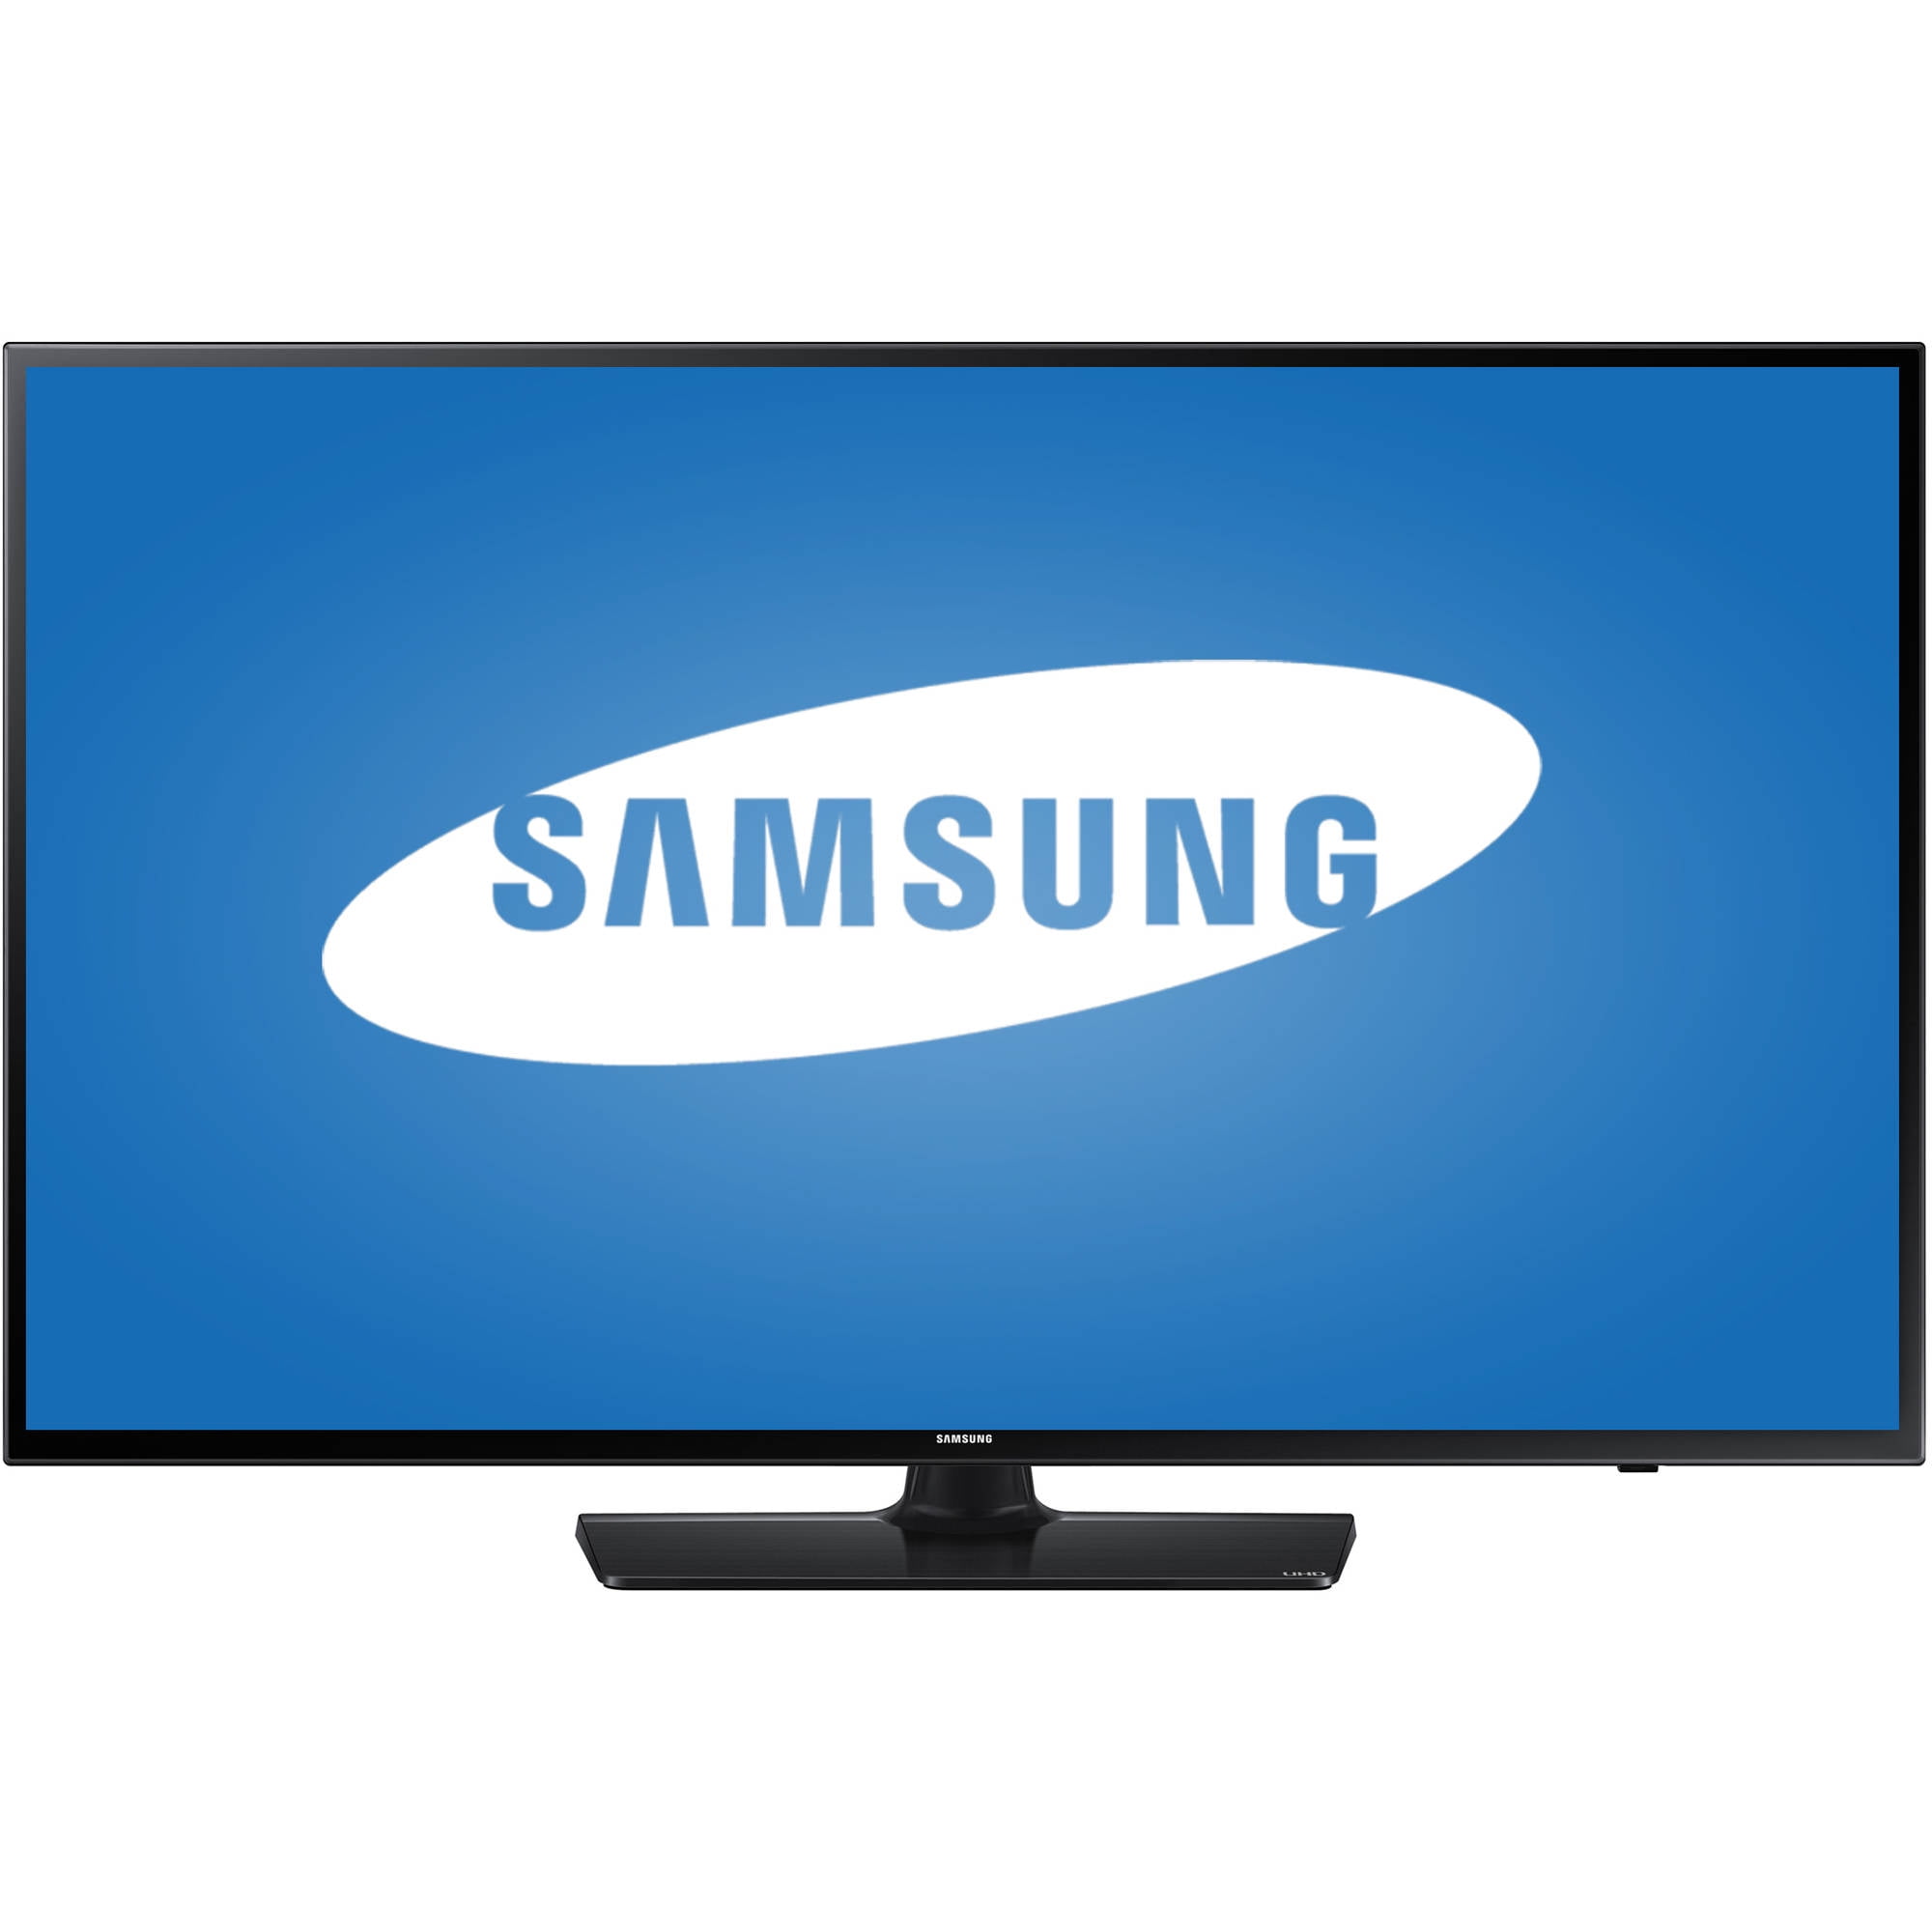 B & E Touch Anti-Glare Screen Protector for Samsung NU7100 Series 43 4K UHD Smart TV